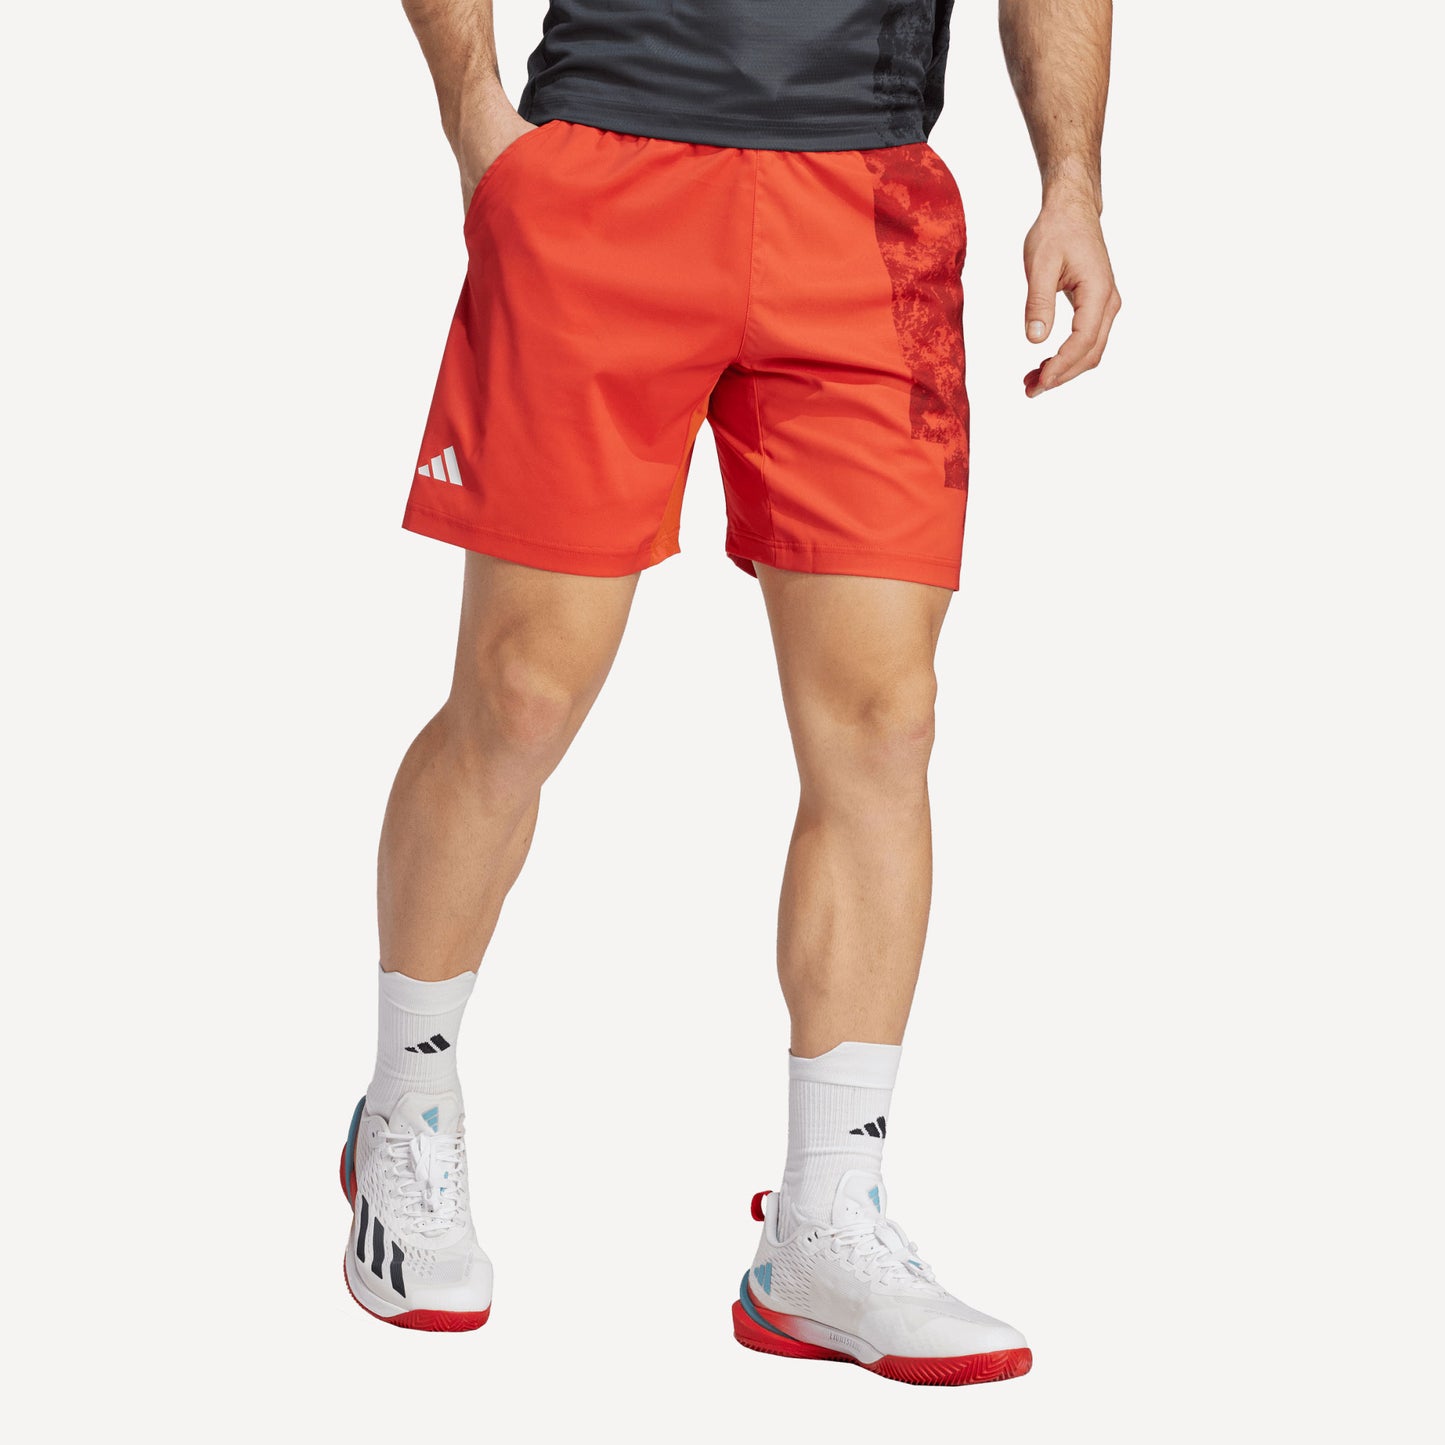 adidas Paris Ergo Men's 7-Inch Tennis Shorts Red (4)